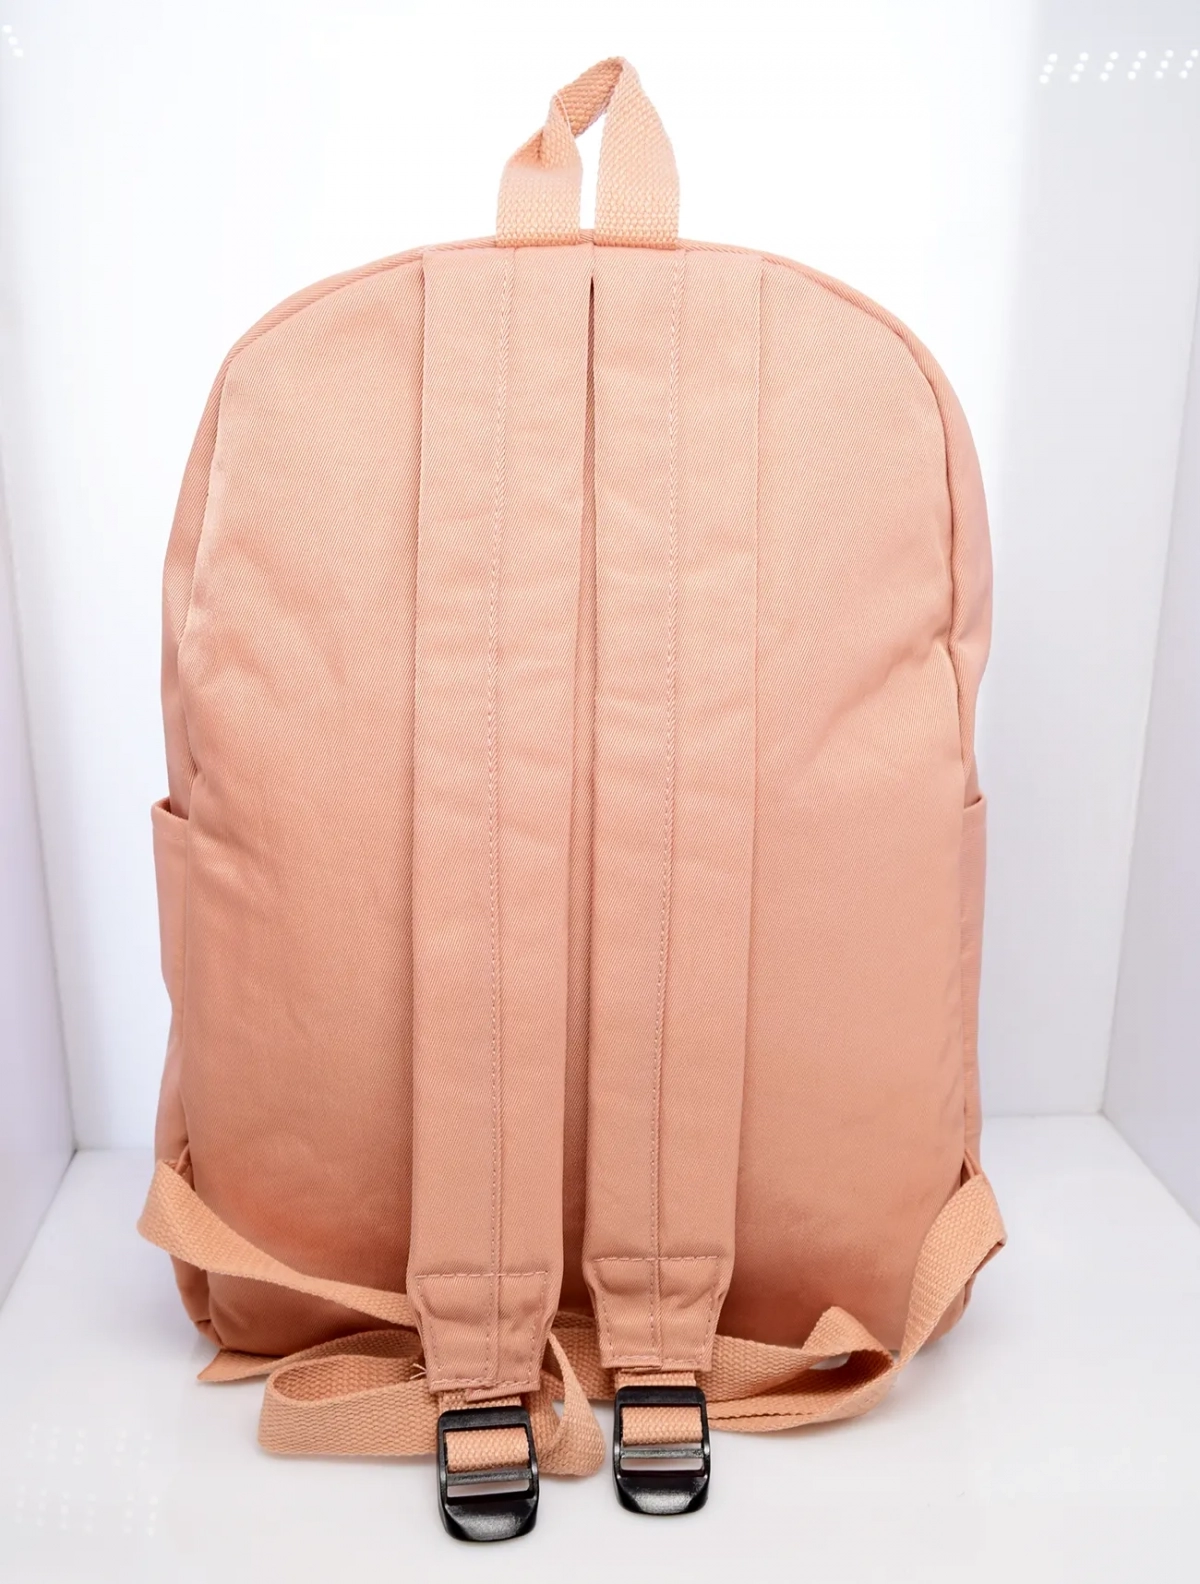 Рюкзаки Y3137-20 рюкзак розовый